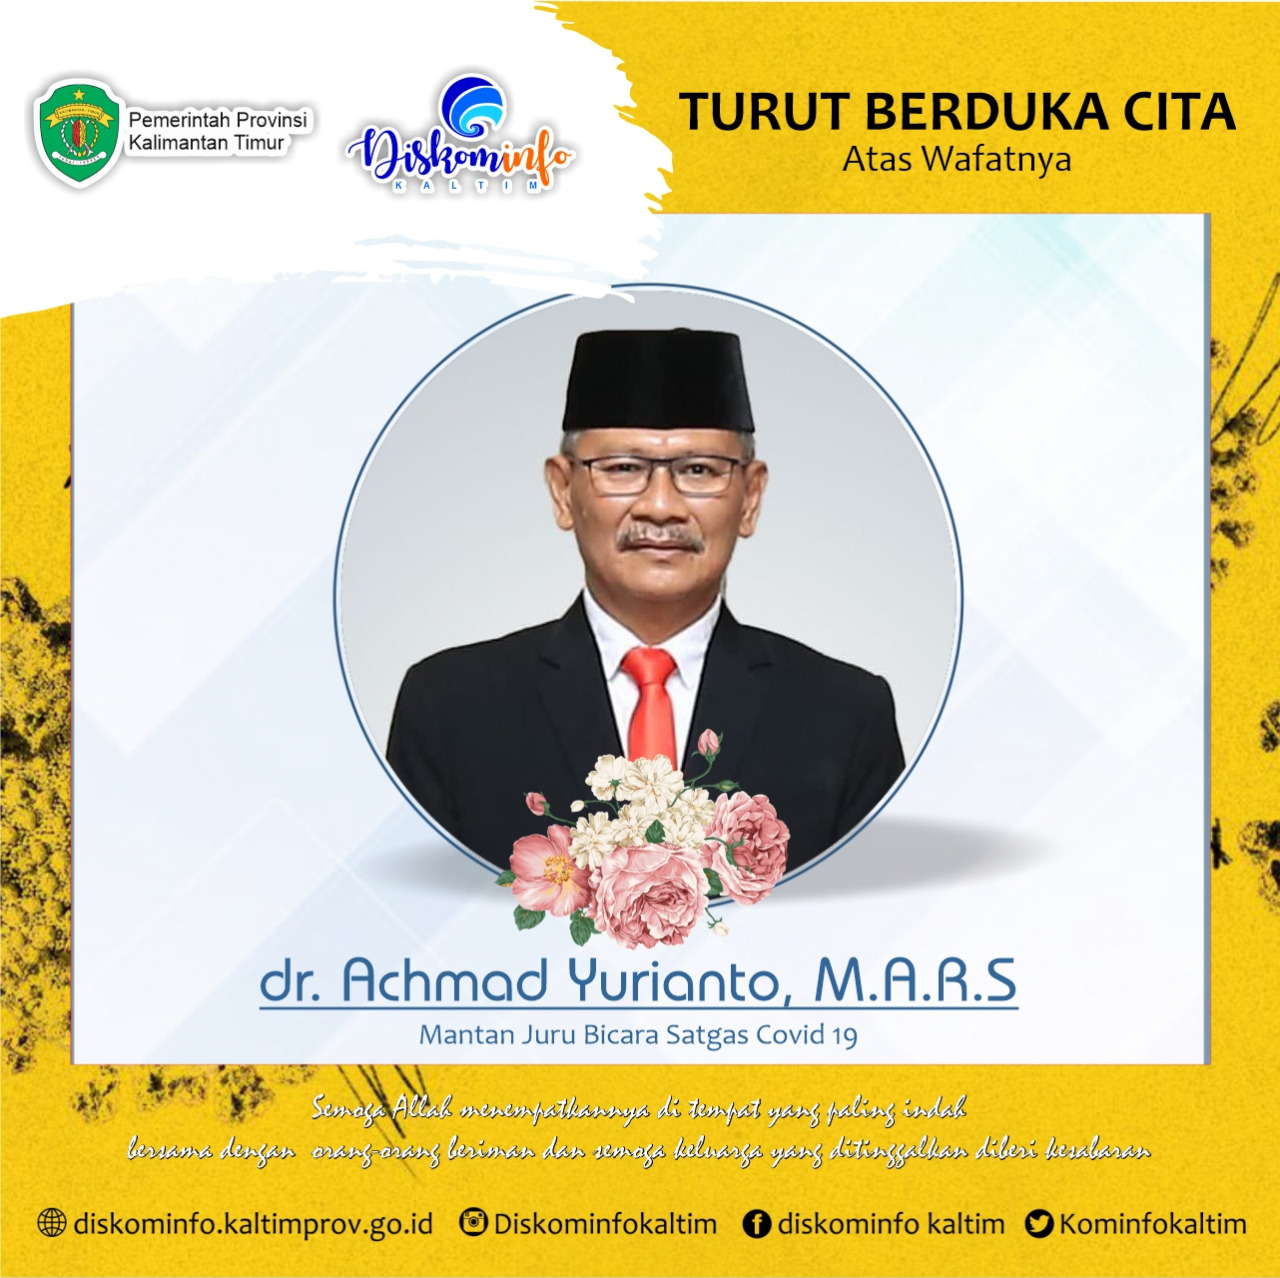 Ucapan duka dr. Achmad Yurianto,M.A.R.S (Mantan Juru Bicara Covid-19 RI & Ketua Dewan Pengawas BPJS Kesehatan)